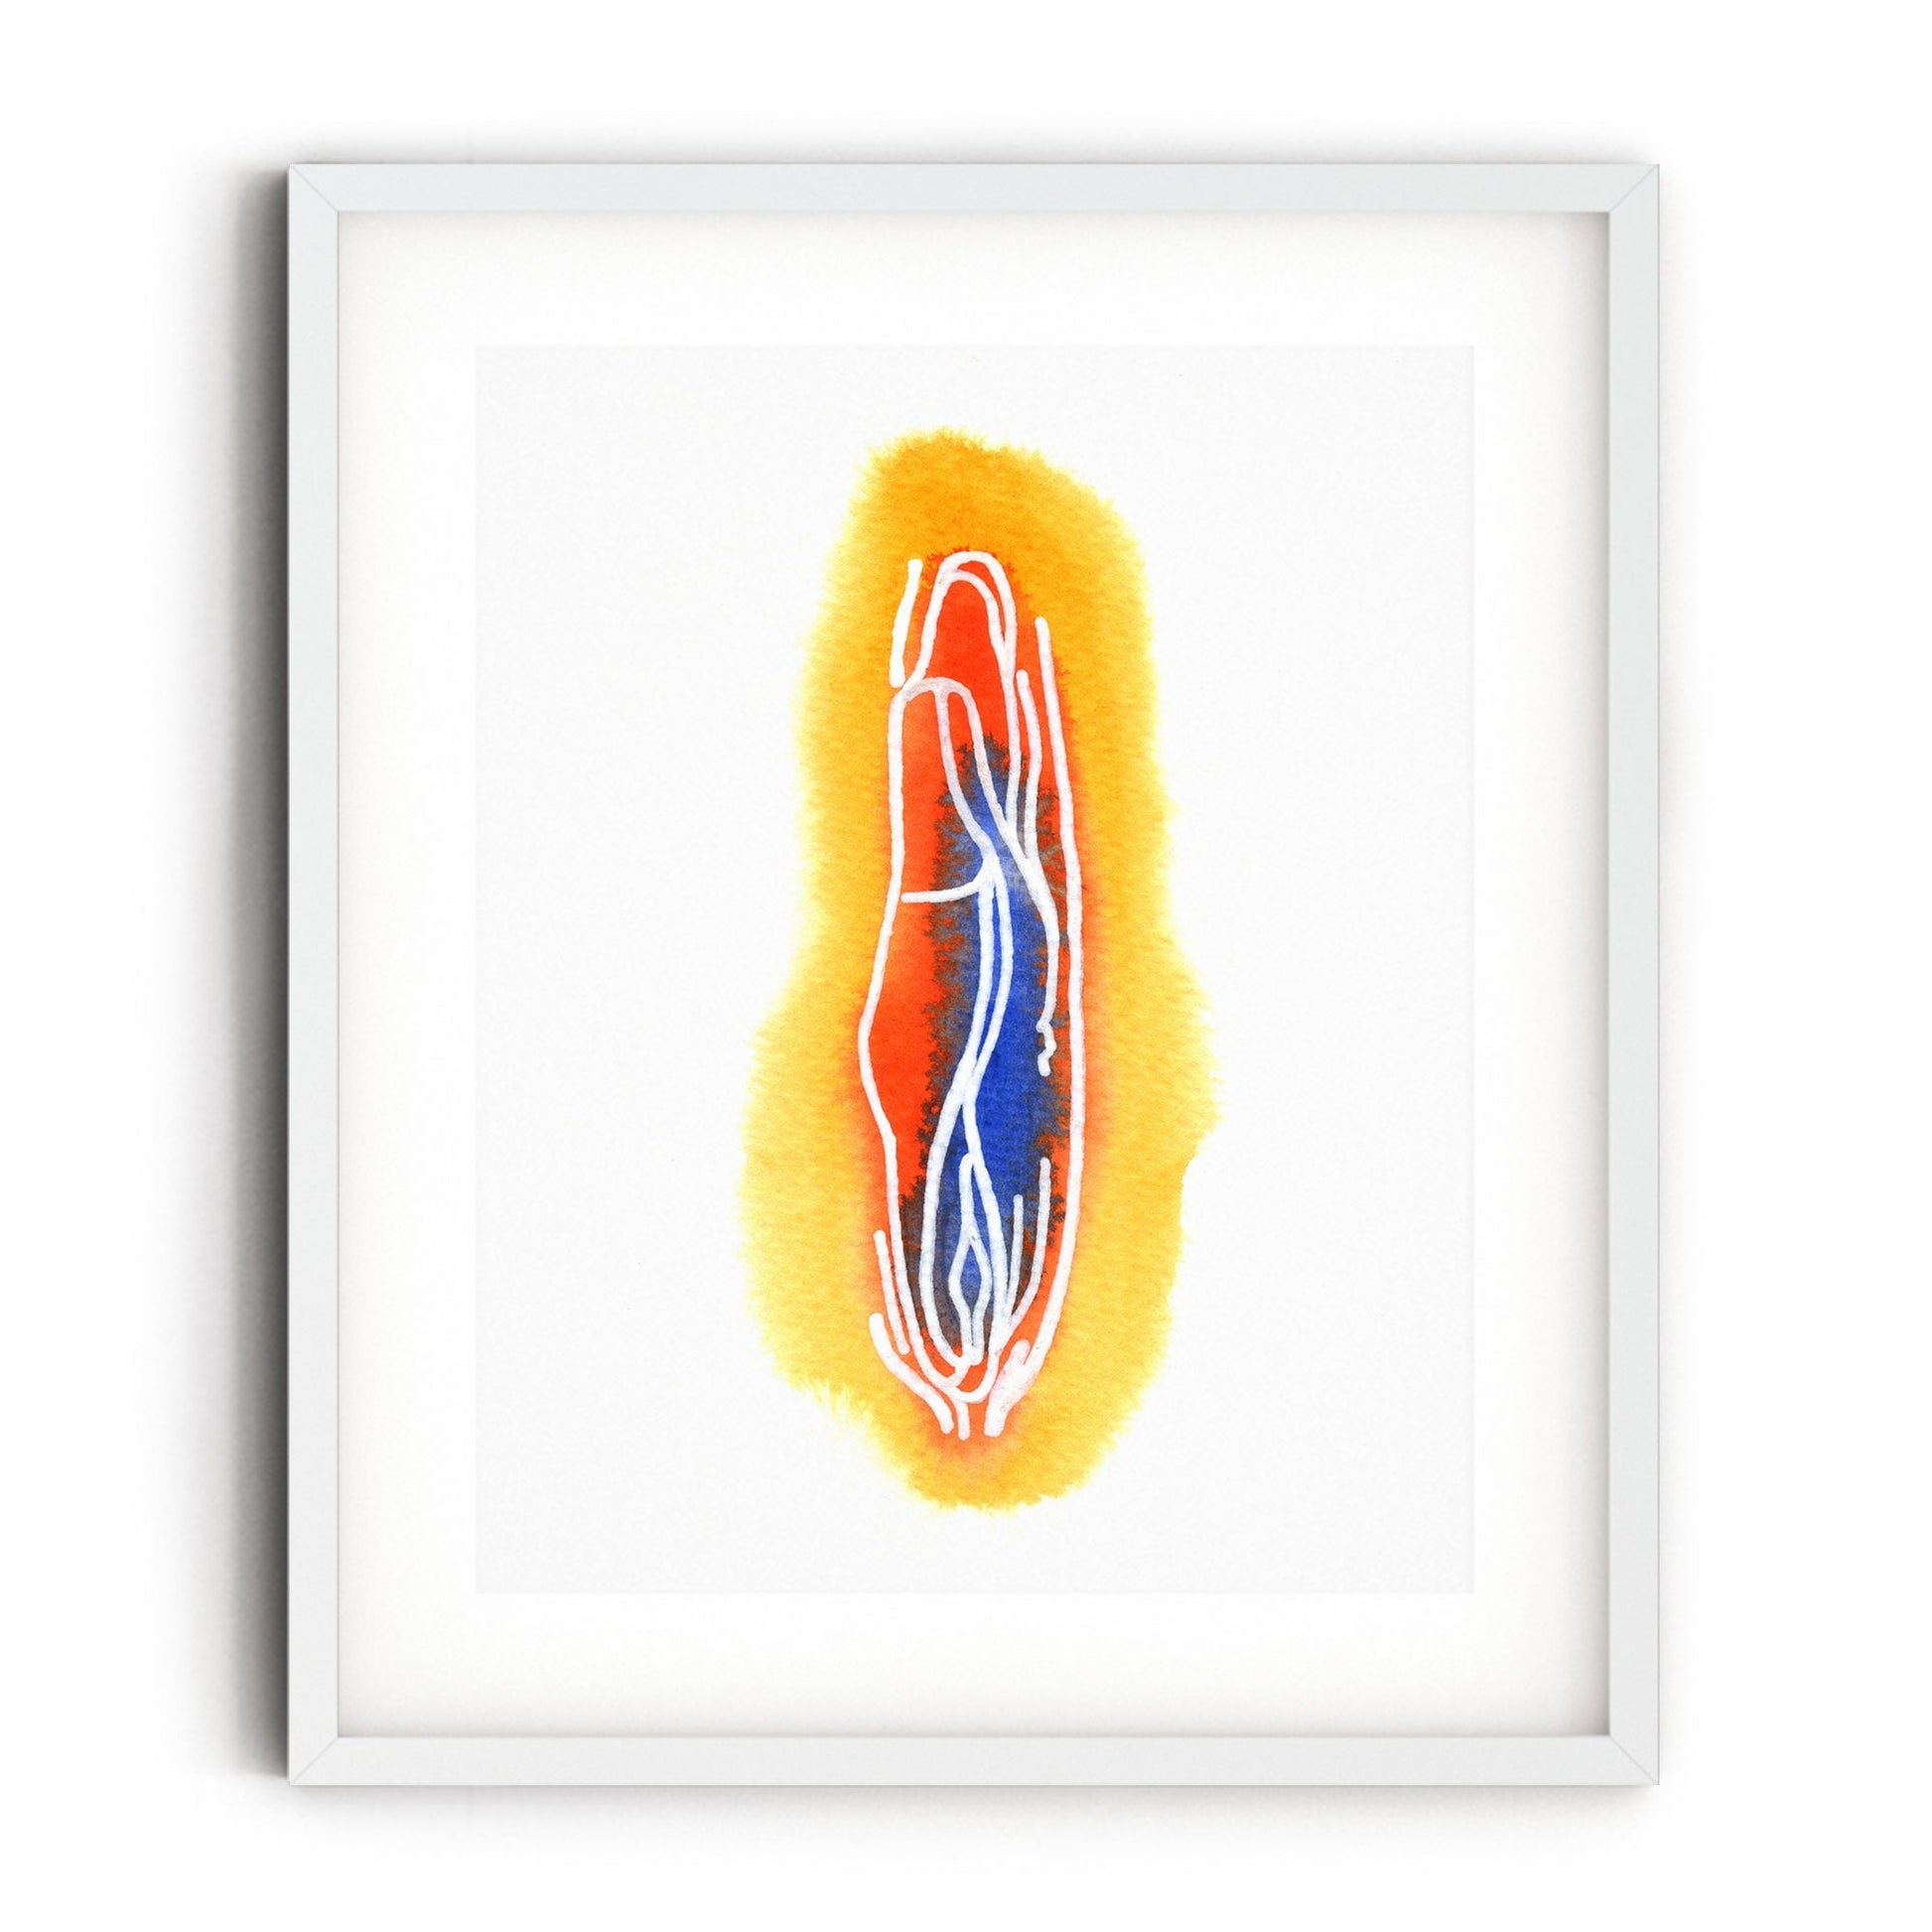 Vulva art print 02, white frame with mat - Candid Almond